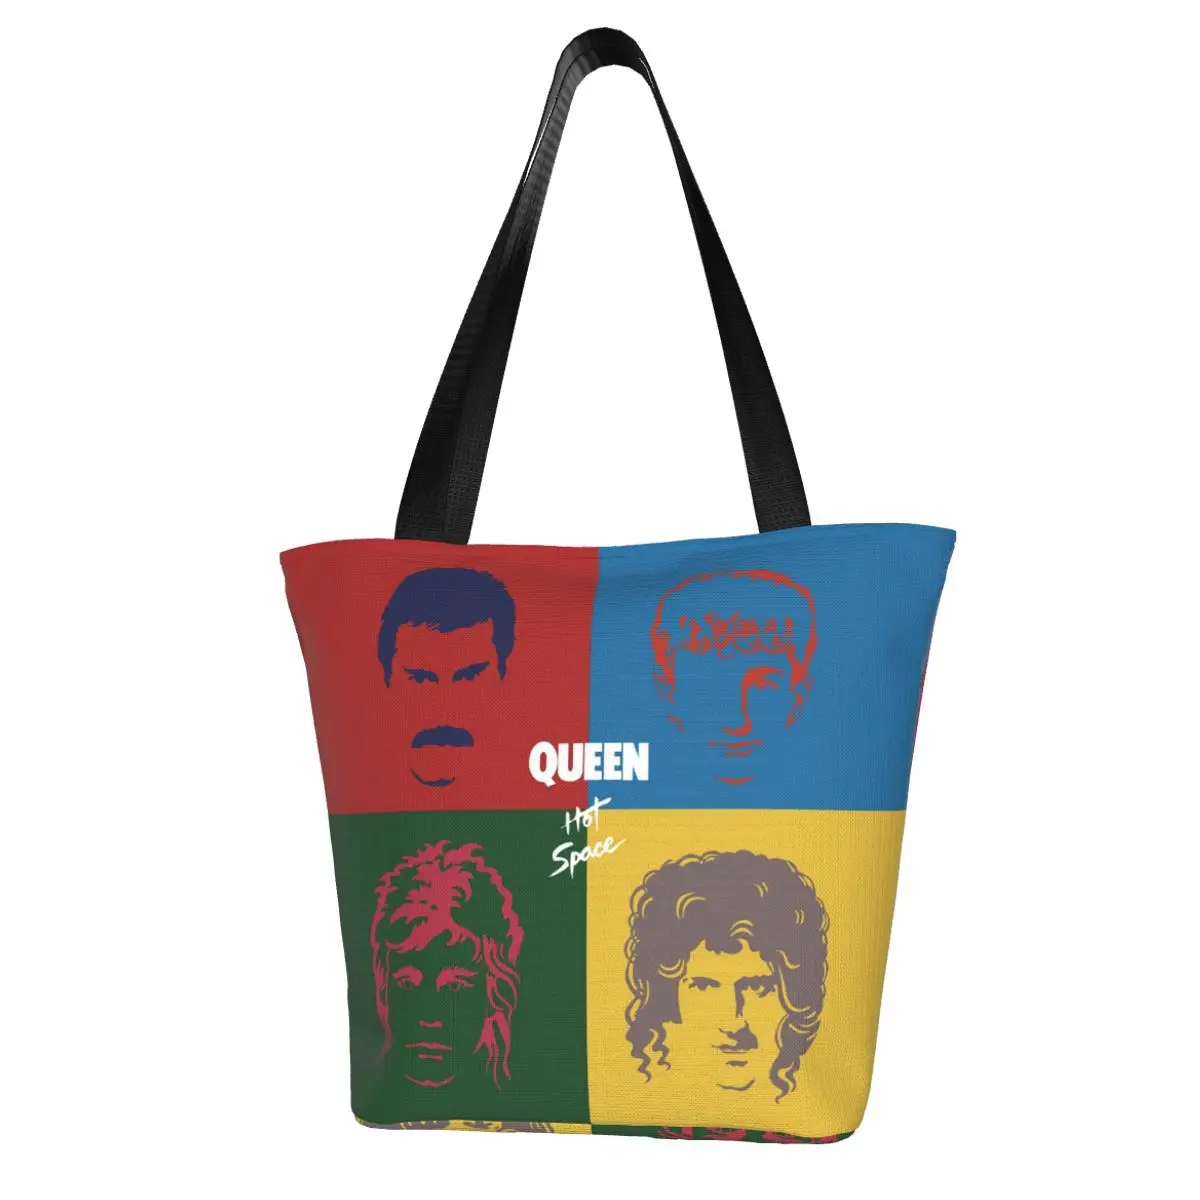 Queen Shopping Bag Aesthetic Cloth Outdoor Handbag Female Fashion Bags